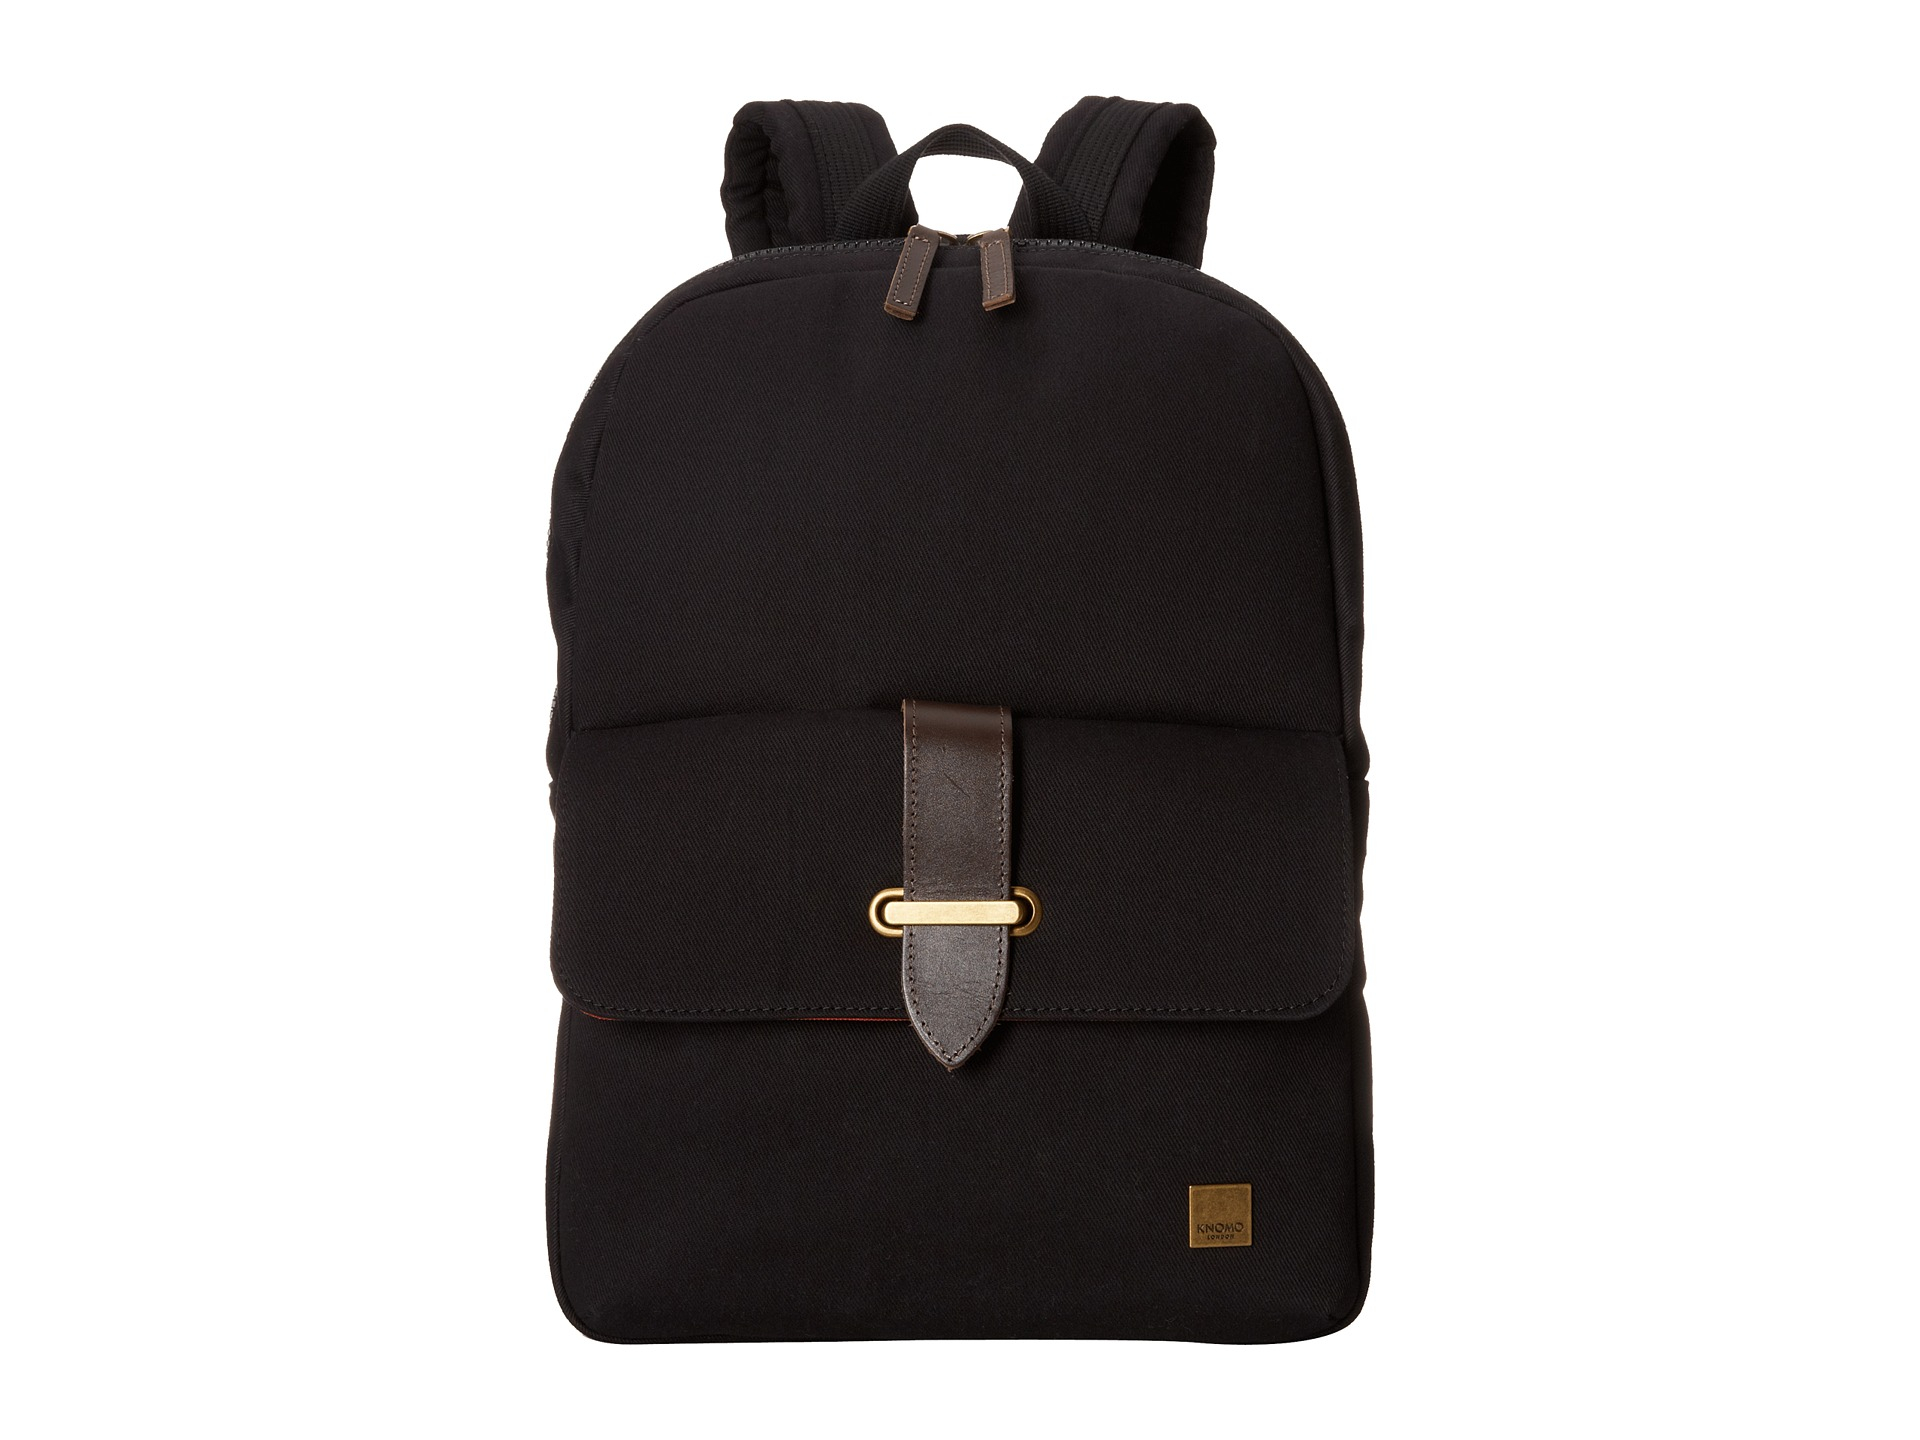 Lyst - Knomo Bude Laptop Bag in Black for Men